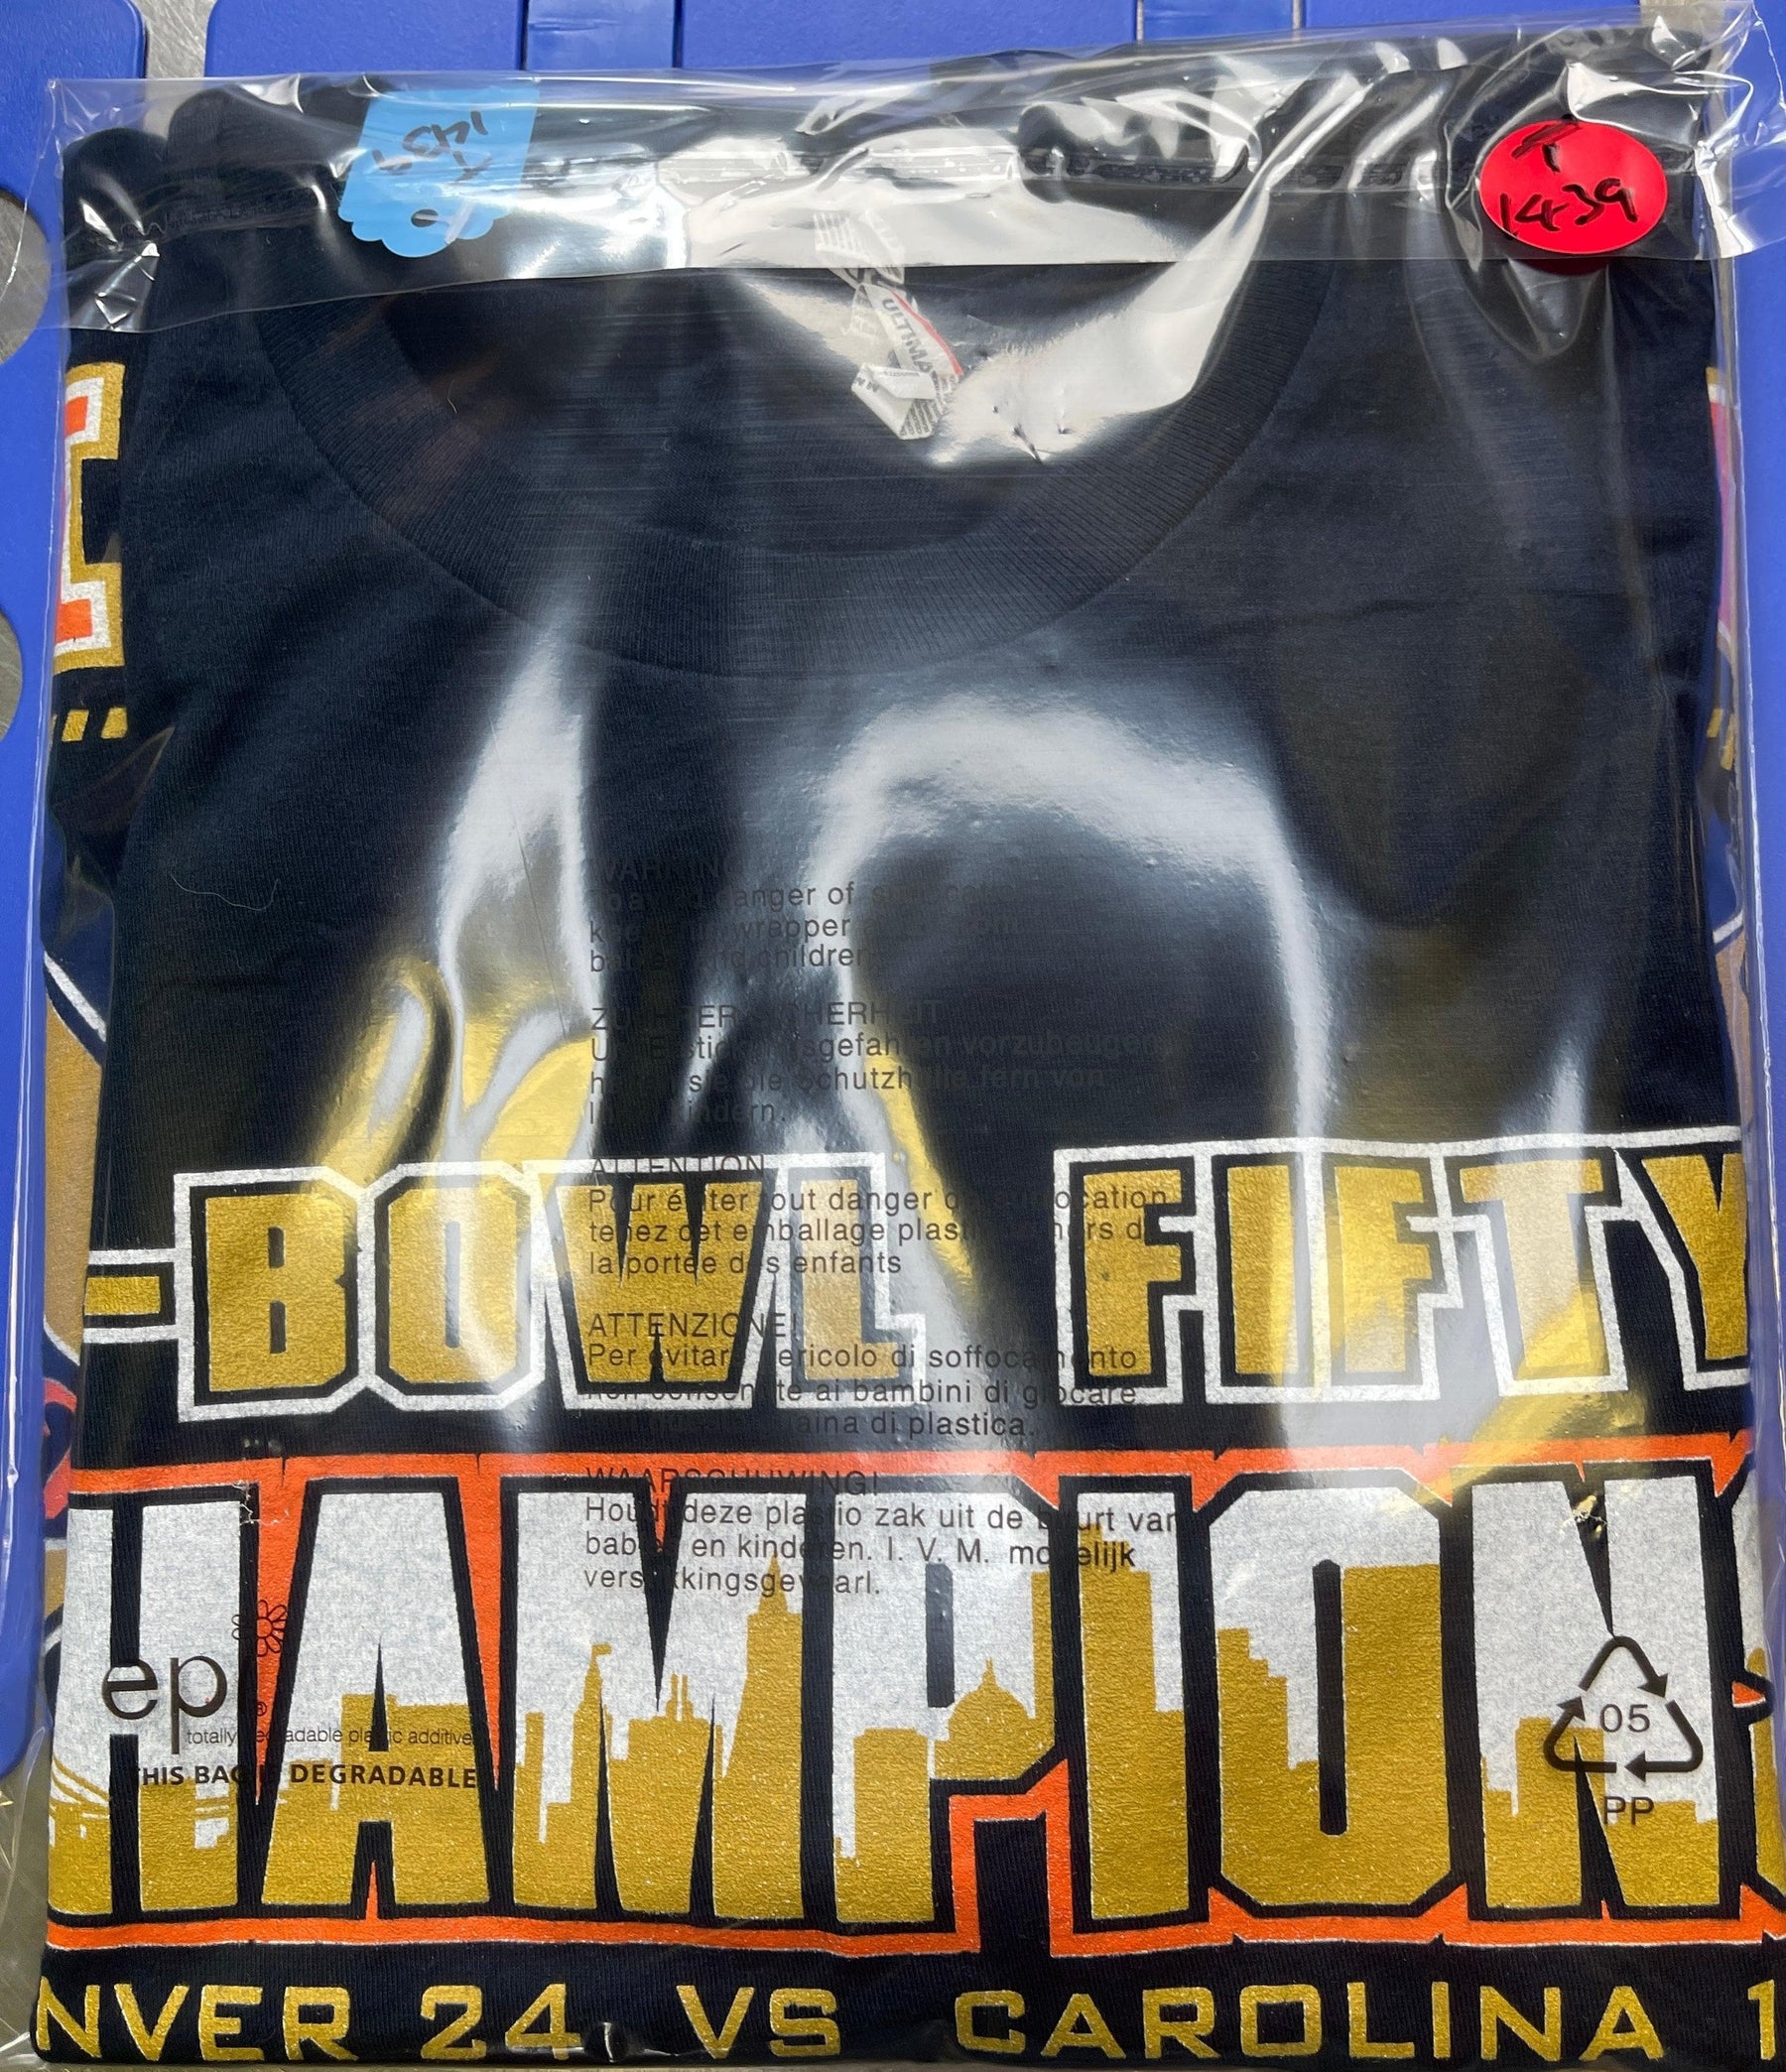 NFL Denver Broncos Super Bowl 50 Champions T-Shirt Men's Medium